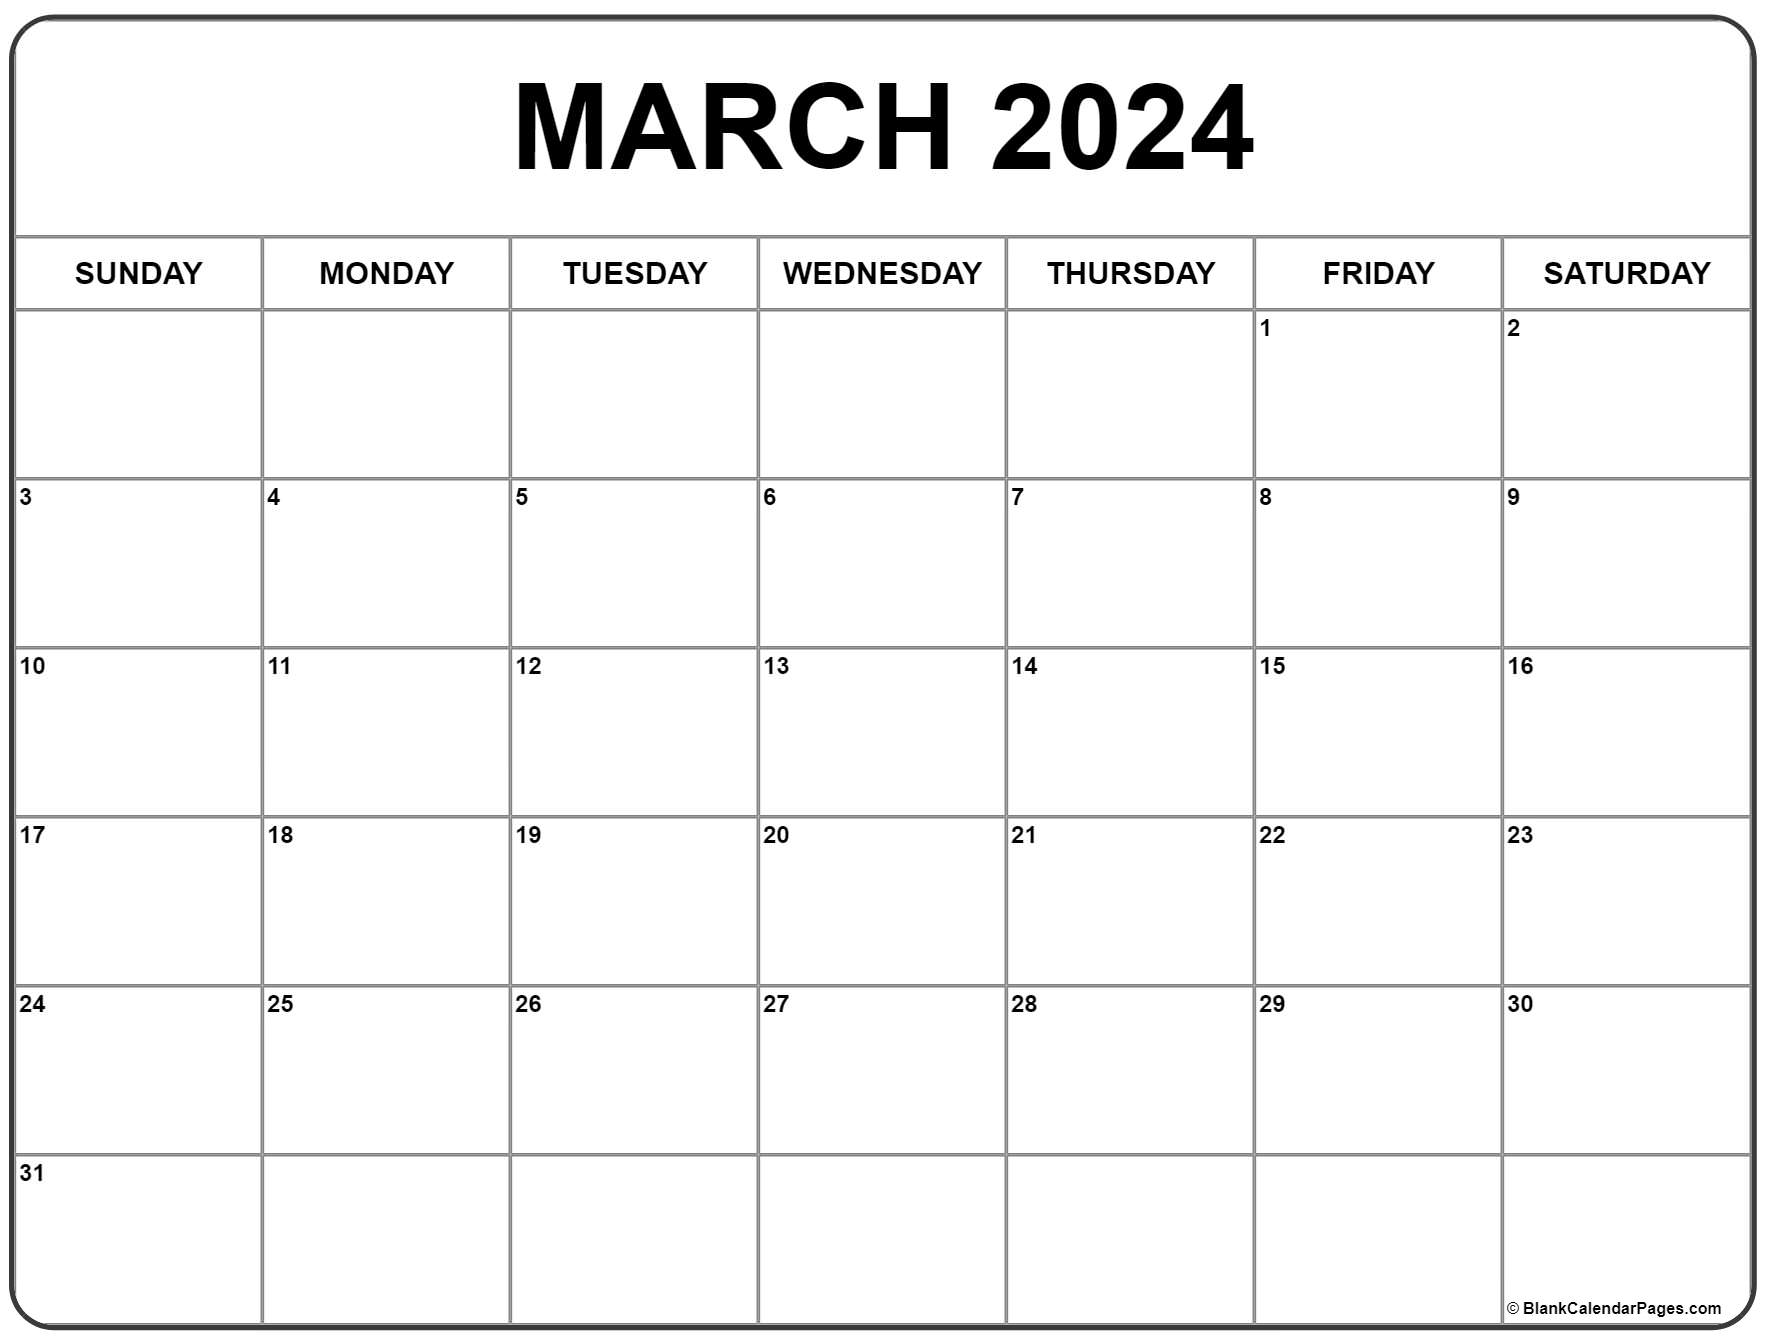 March 2024 Calendar | Free Printable Calendar for Free-Printable-Calendar March 2024